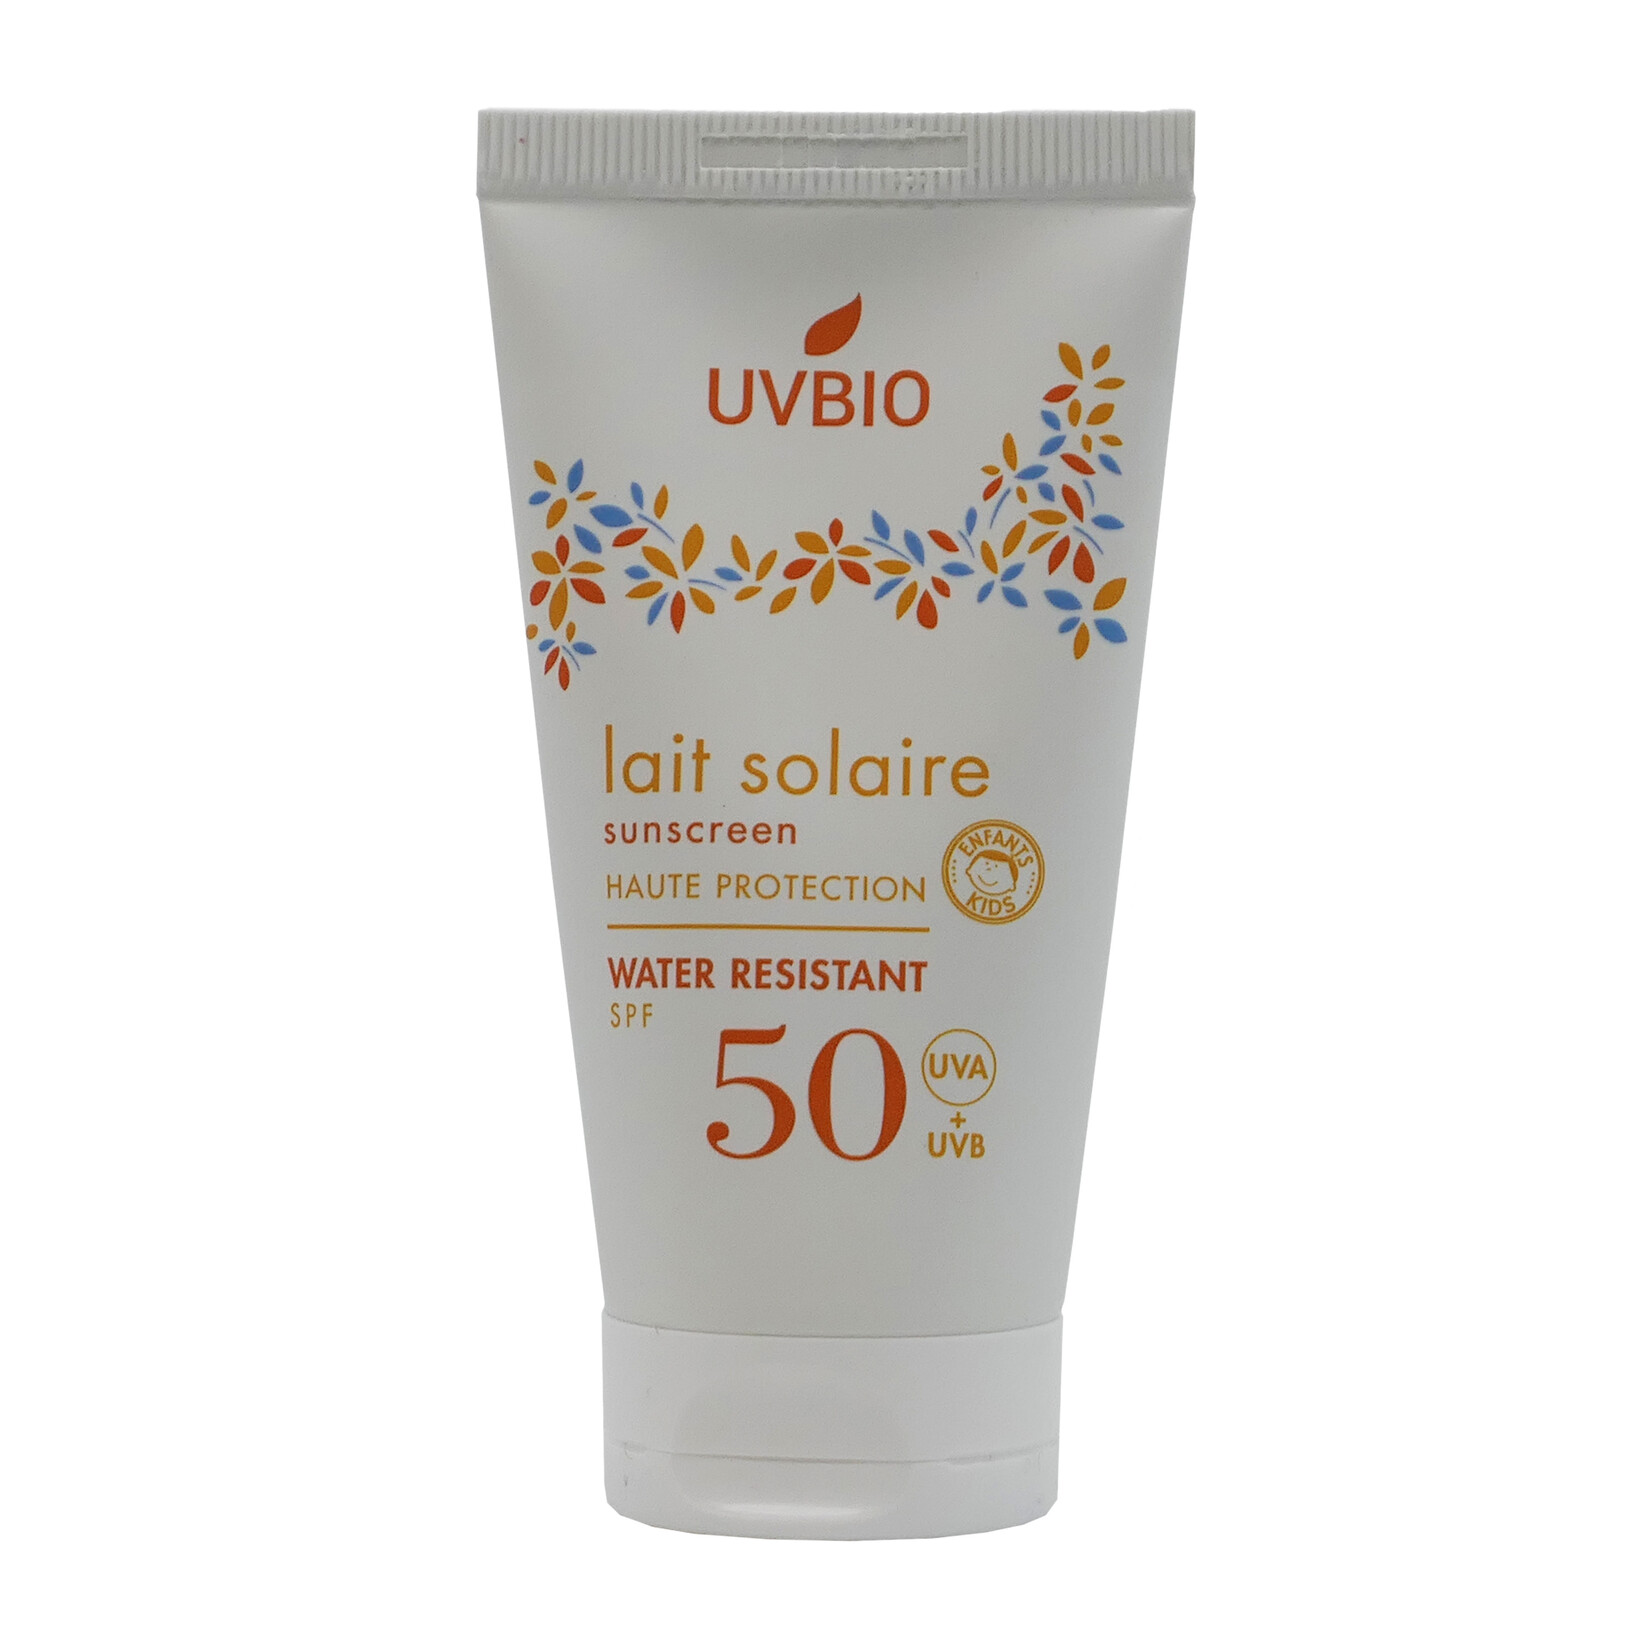 Uv-Bio  UVBIO Sunscreen SPF 50 Bio (Water resistant) - 50ml